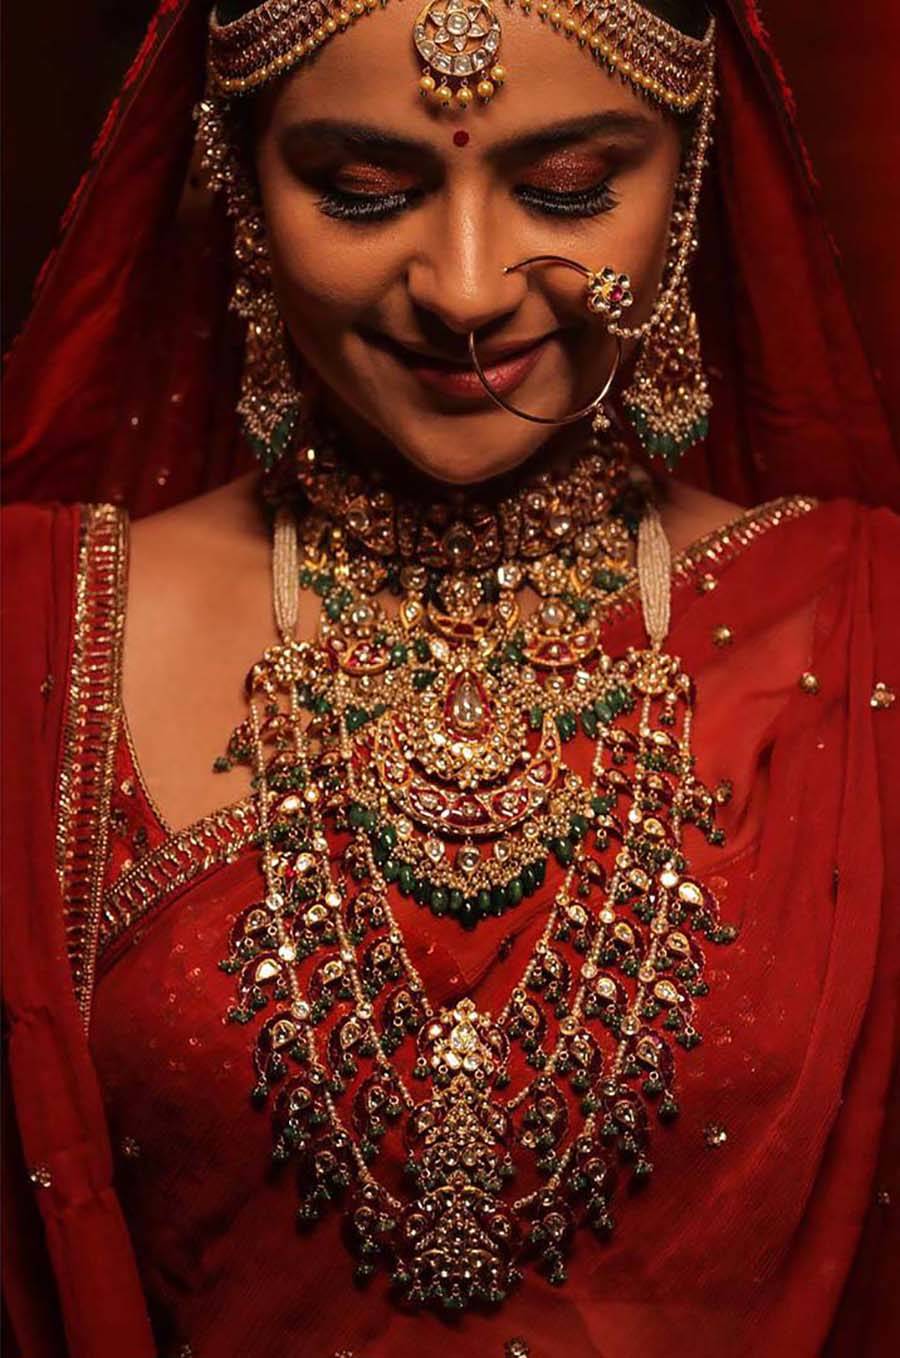 'Diya Aur Baati Hum' actress Prachi Tehlan weds Delhi-based businessman